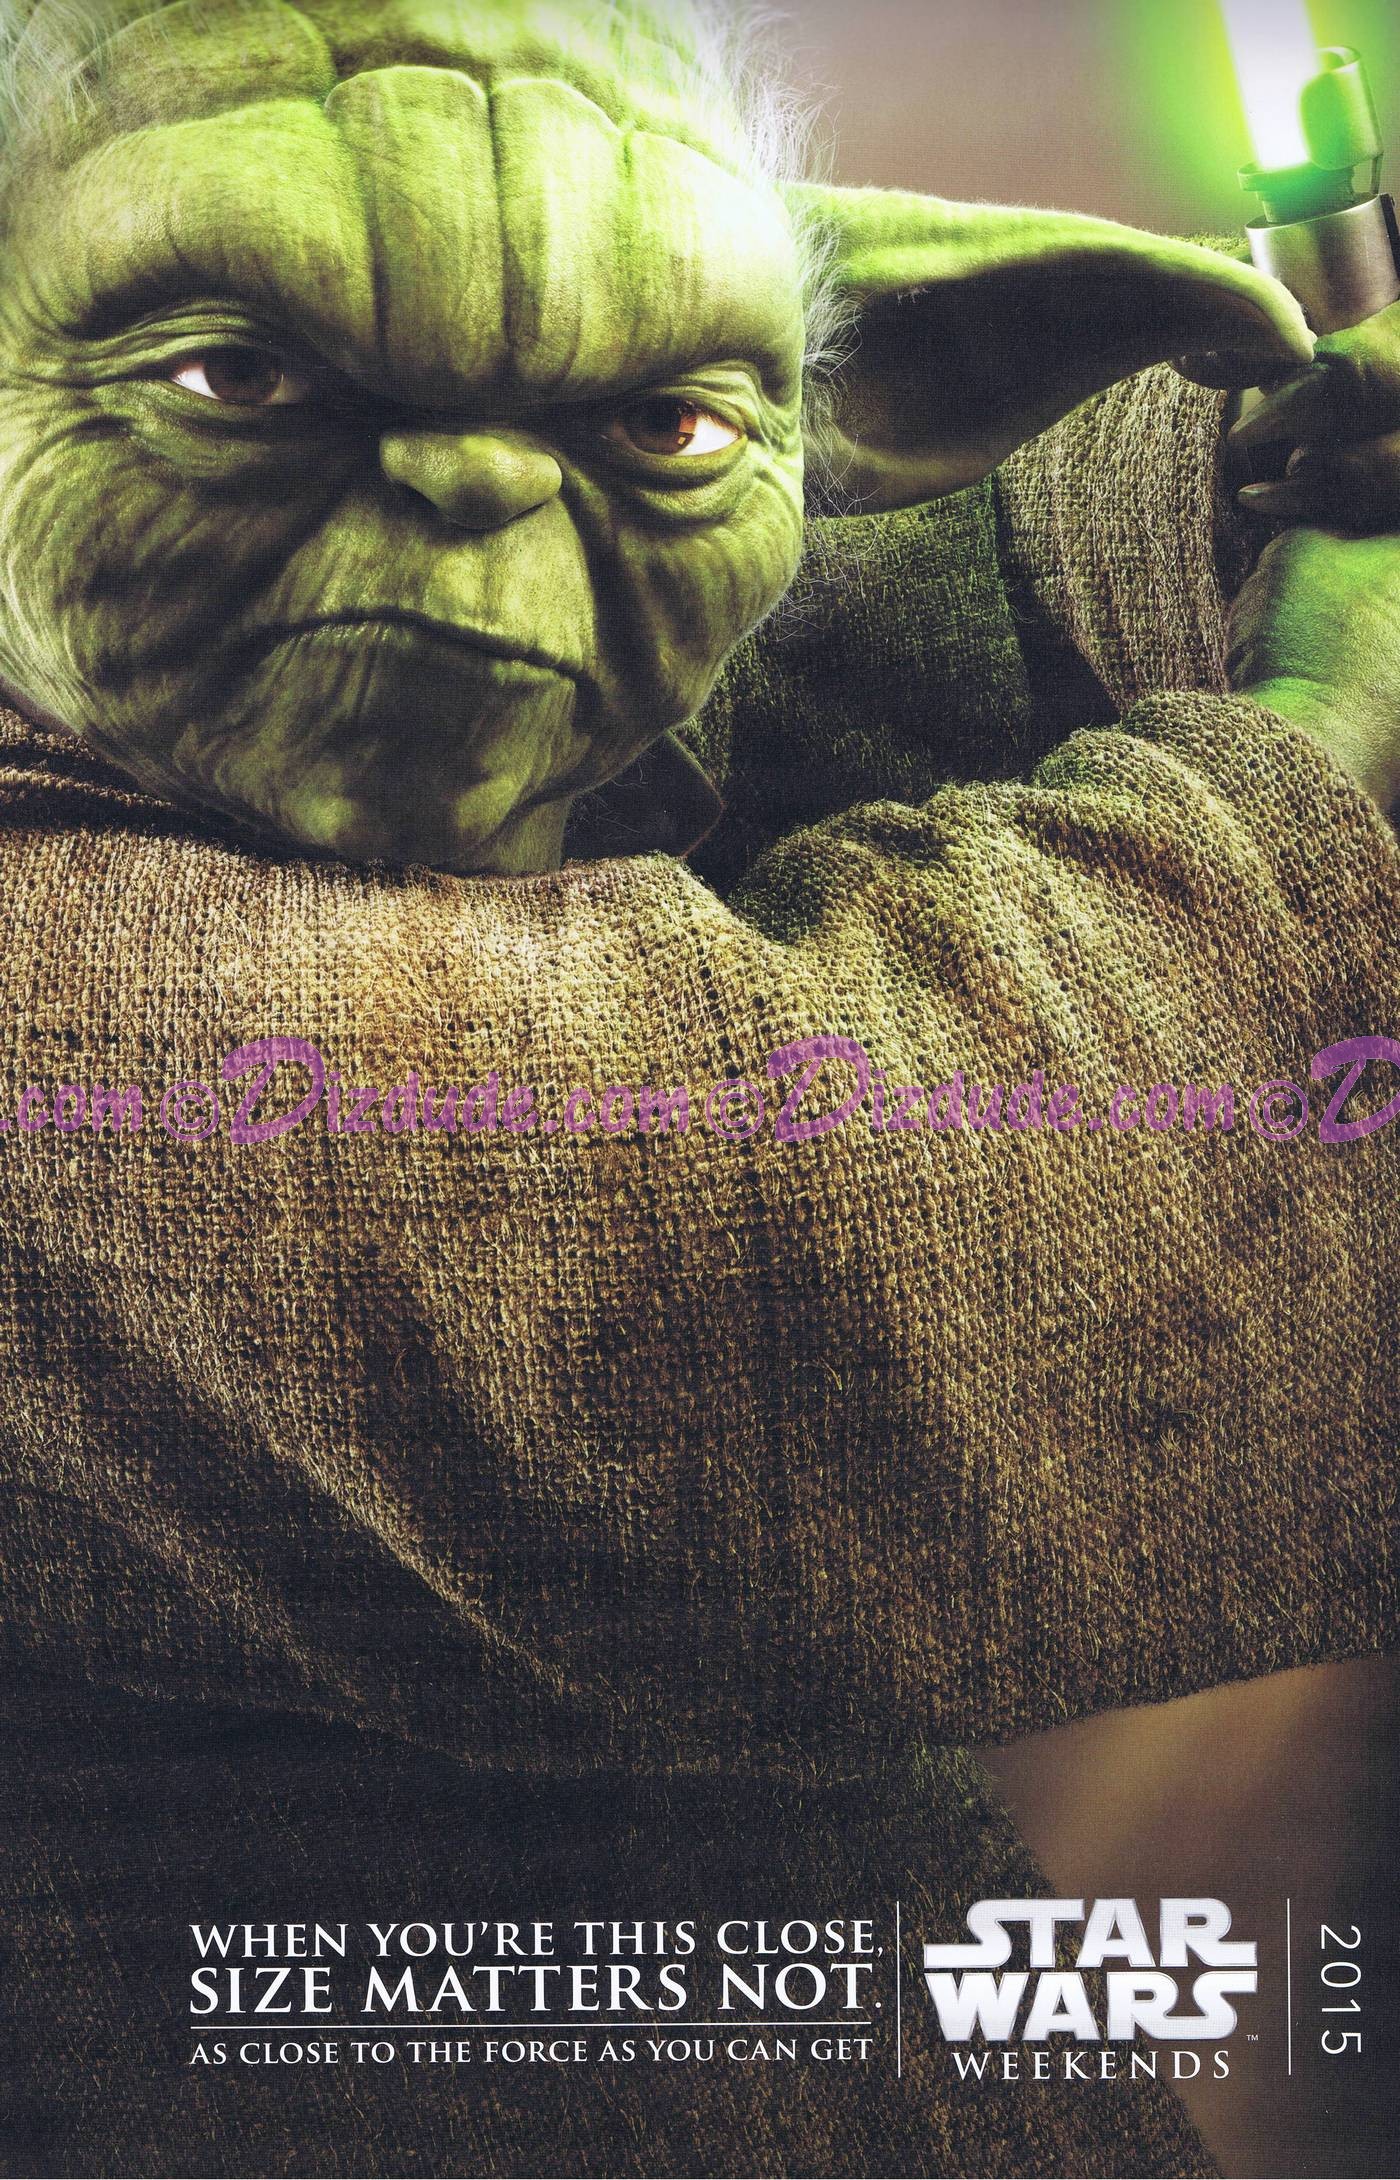 Disney Star Wars Weekends 2015 Week 1 Yoda Passholder Poster Event Exclusive © Dizdude.com